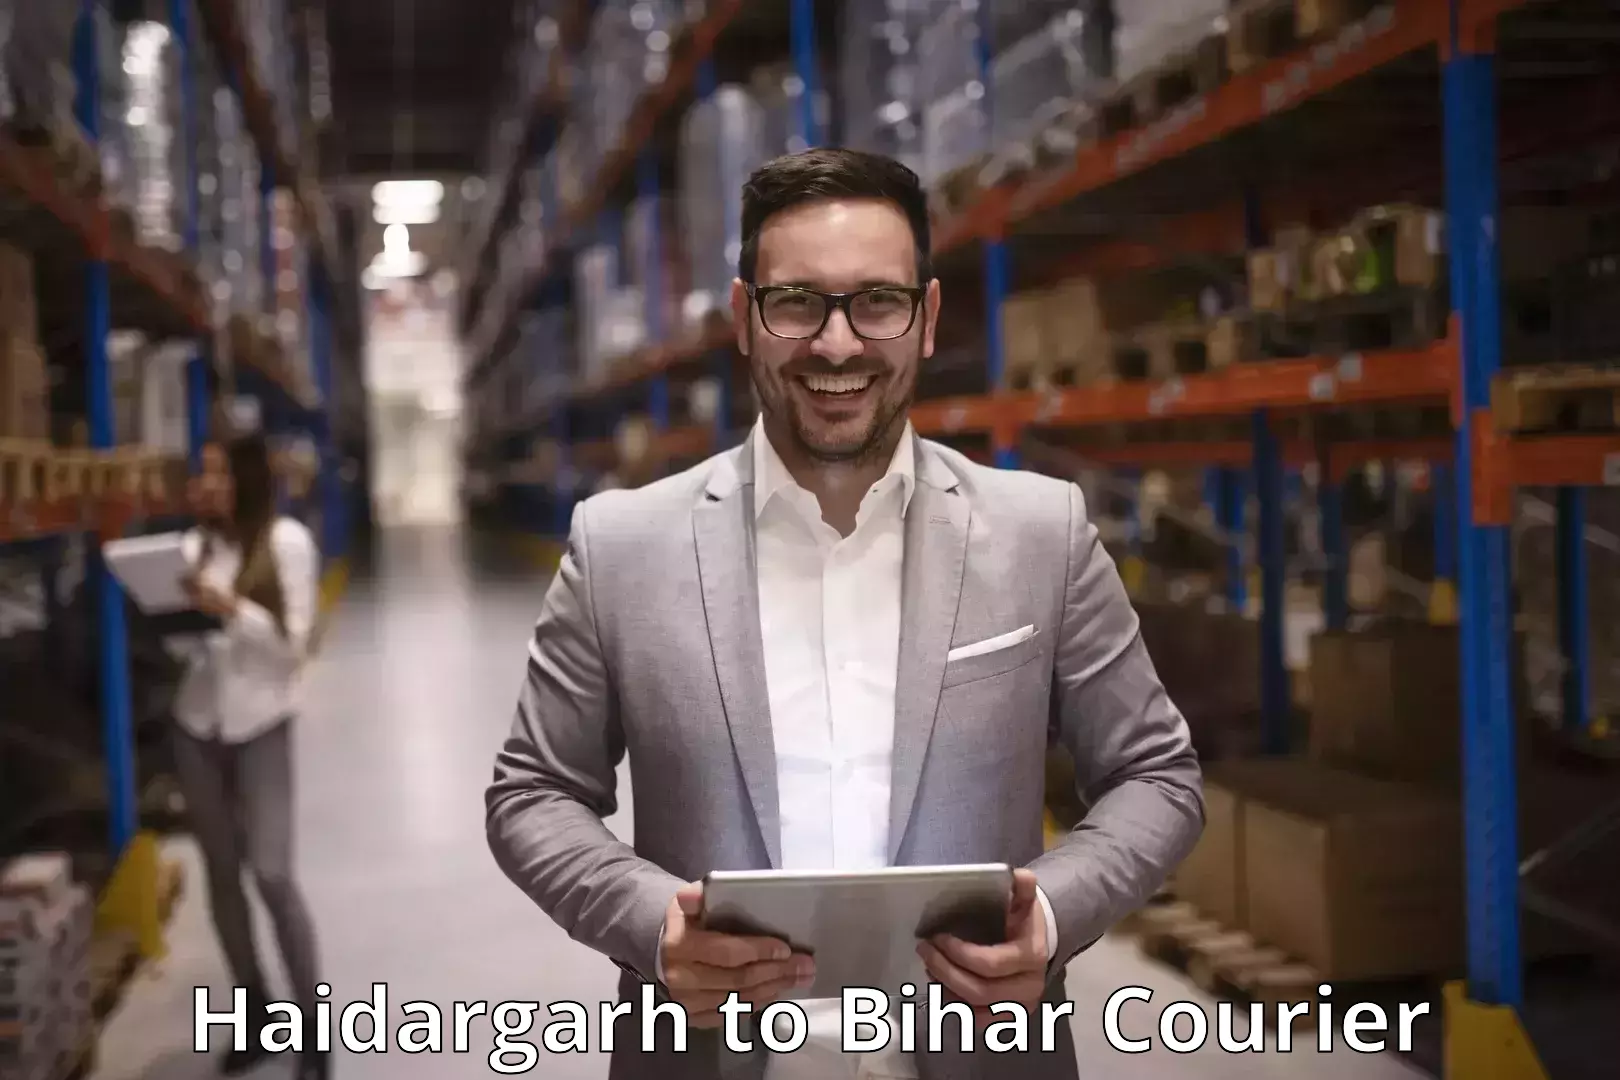 Courier service efficiency Haidargarh to Marhowrah